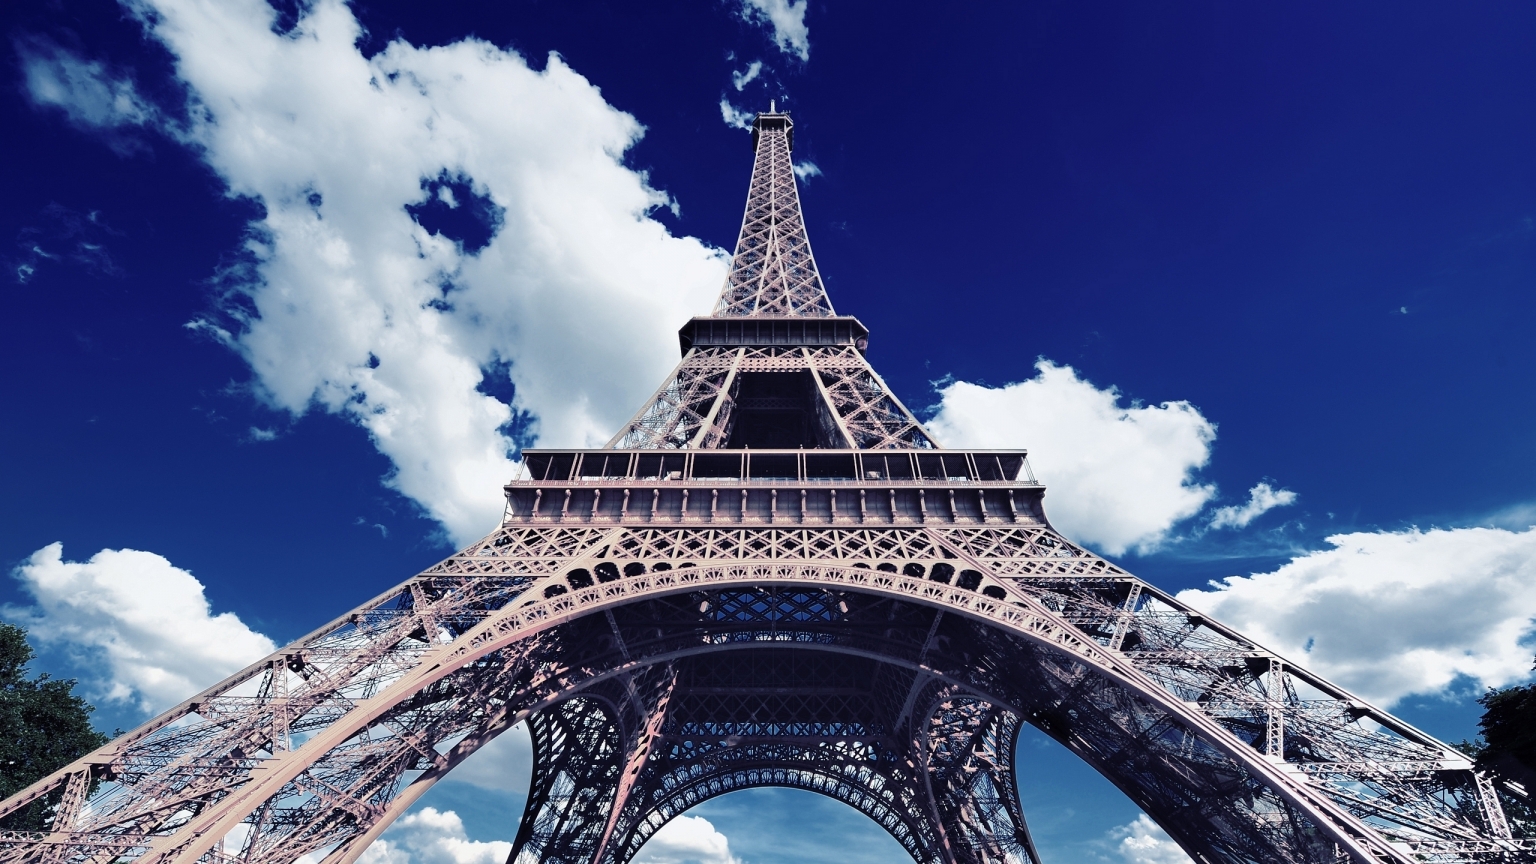 Eiffel Tower Paris for 1536 x 864 HDTV resolution